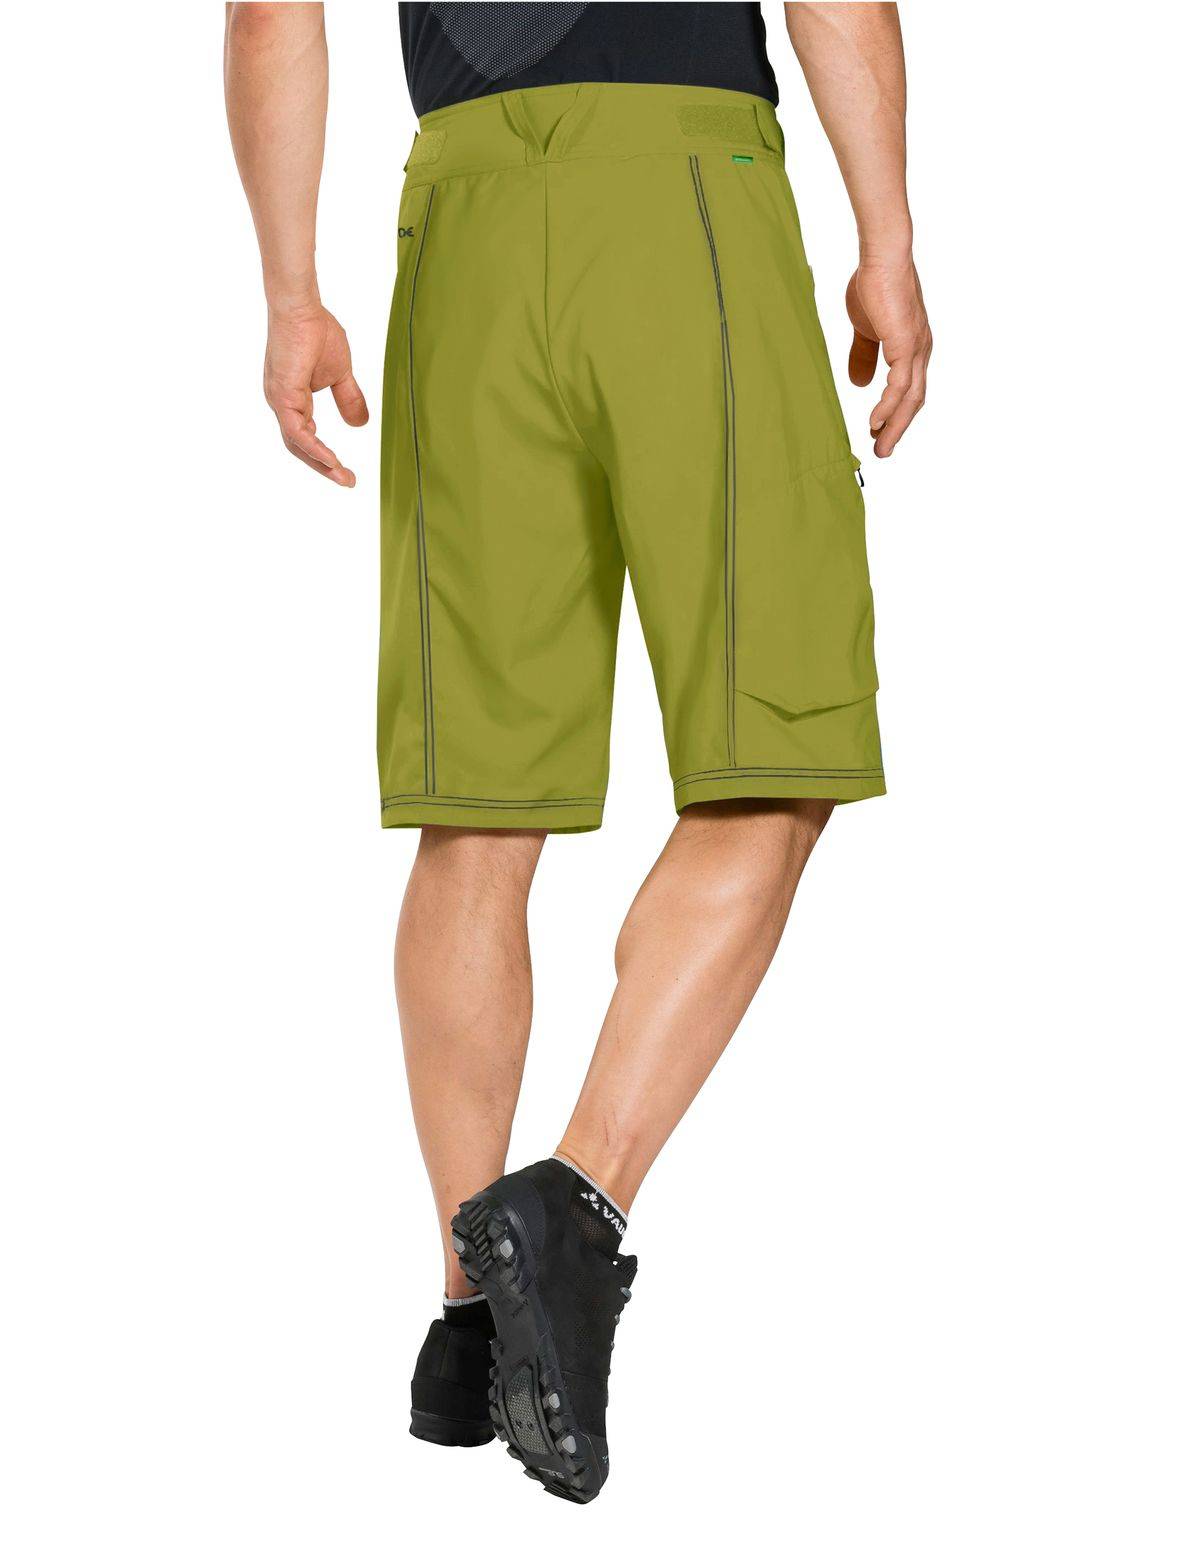 Men's bicycle shorts with Vaude Ledro insole - green Green | BRANDS \ VAUDE  \ MEN'S CYCLING CLOTHING | Red Bird Dystrybutor Markowe Gadżety i odzież  reklamowa